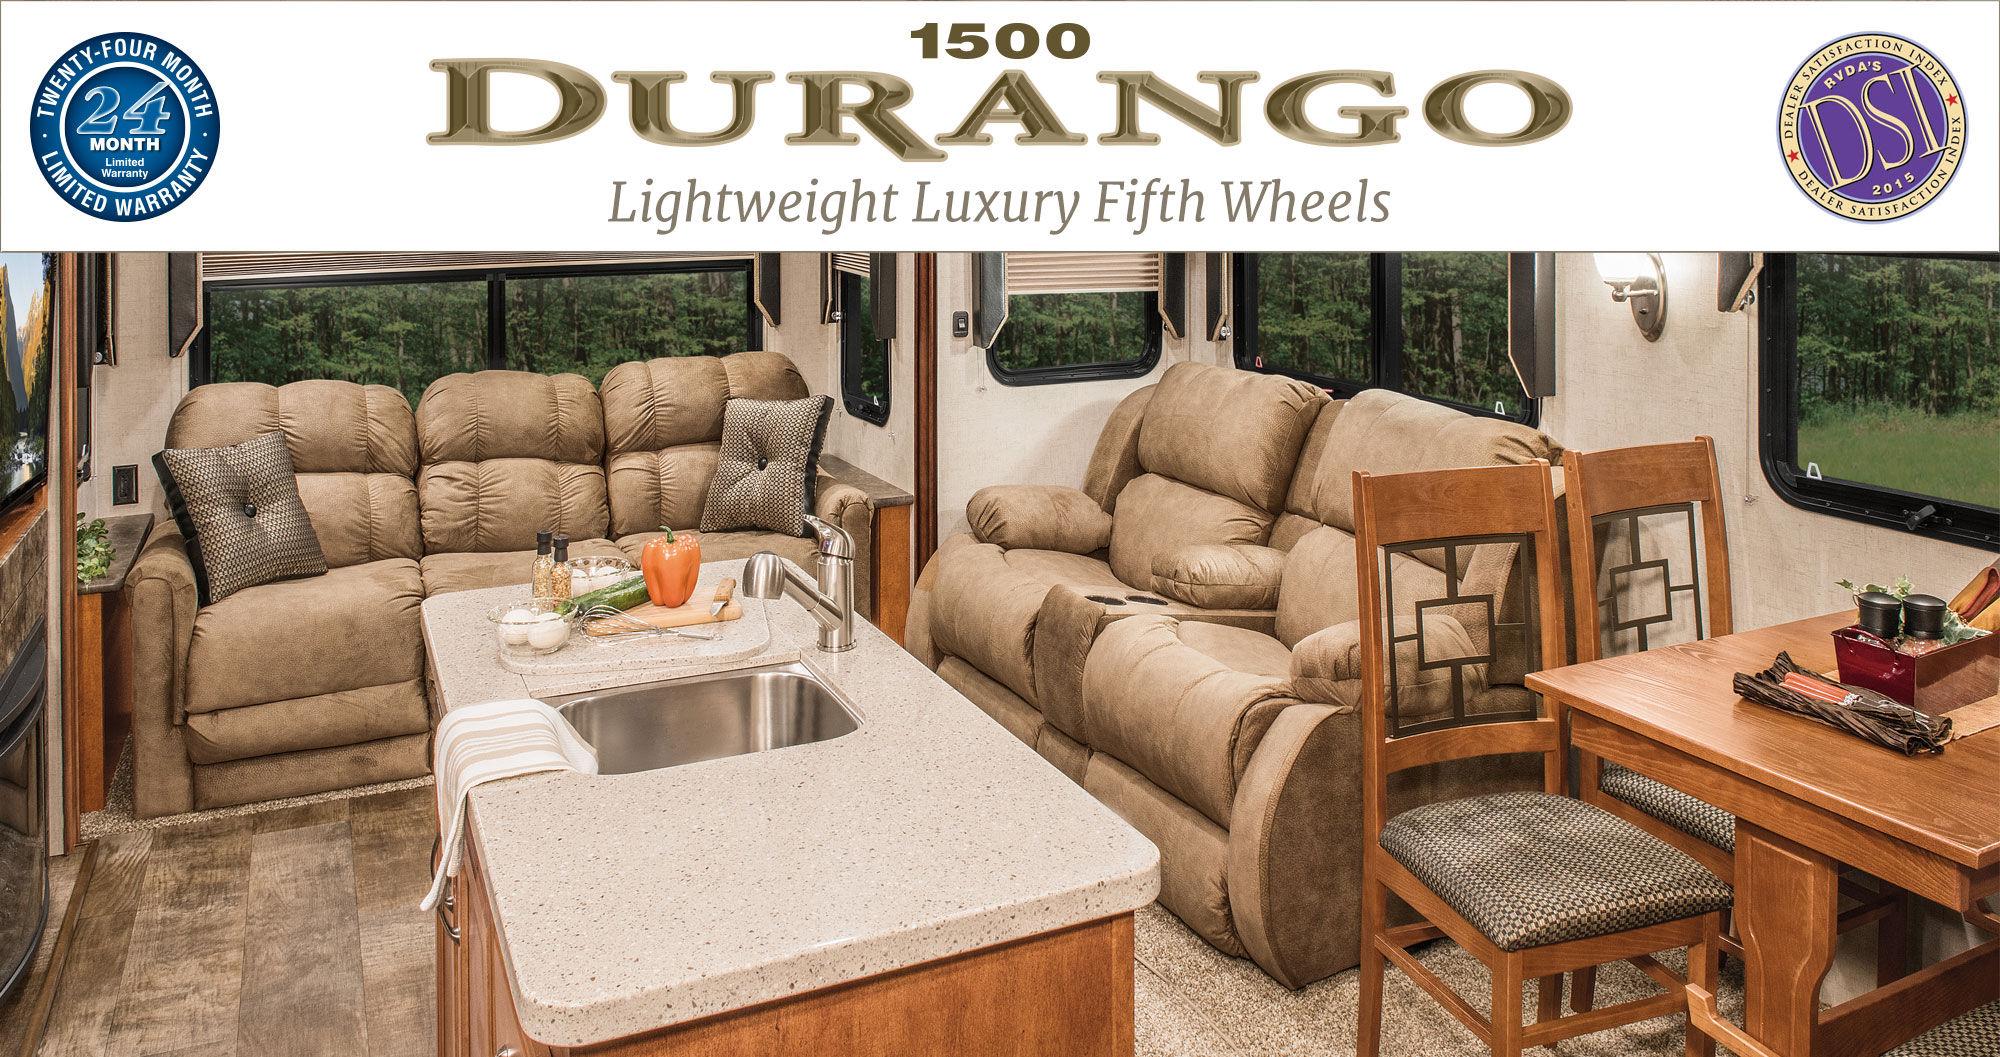 KZ RV Durango 1500 Lightweight Luxury Fifth Wheels Introduction